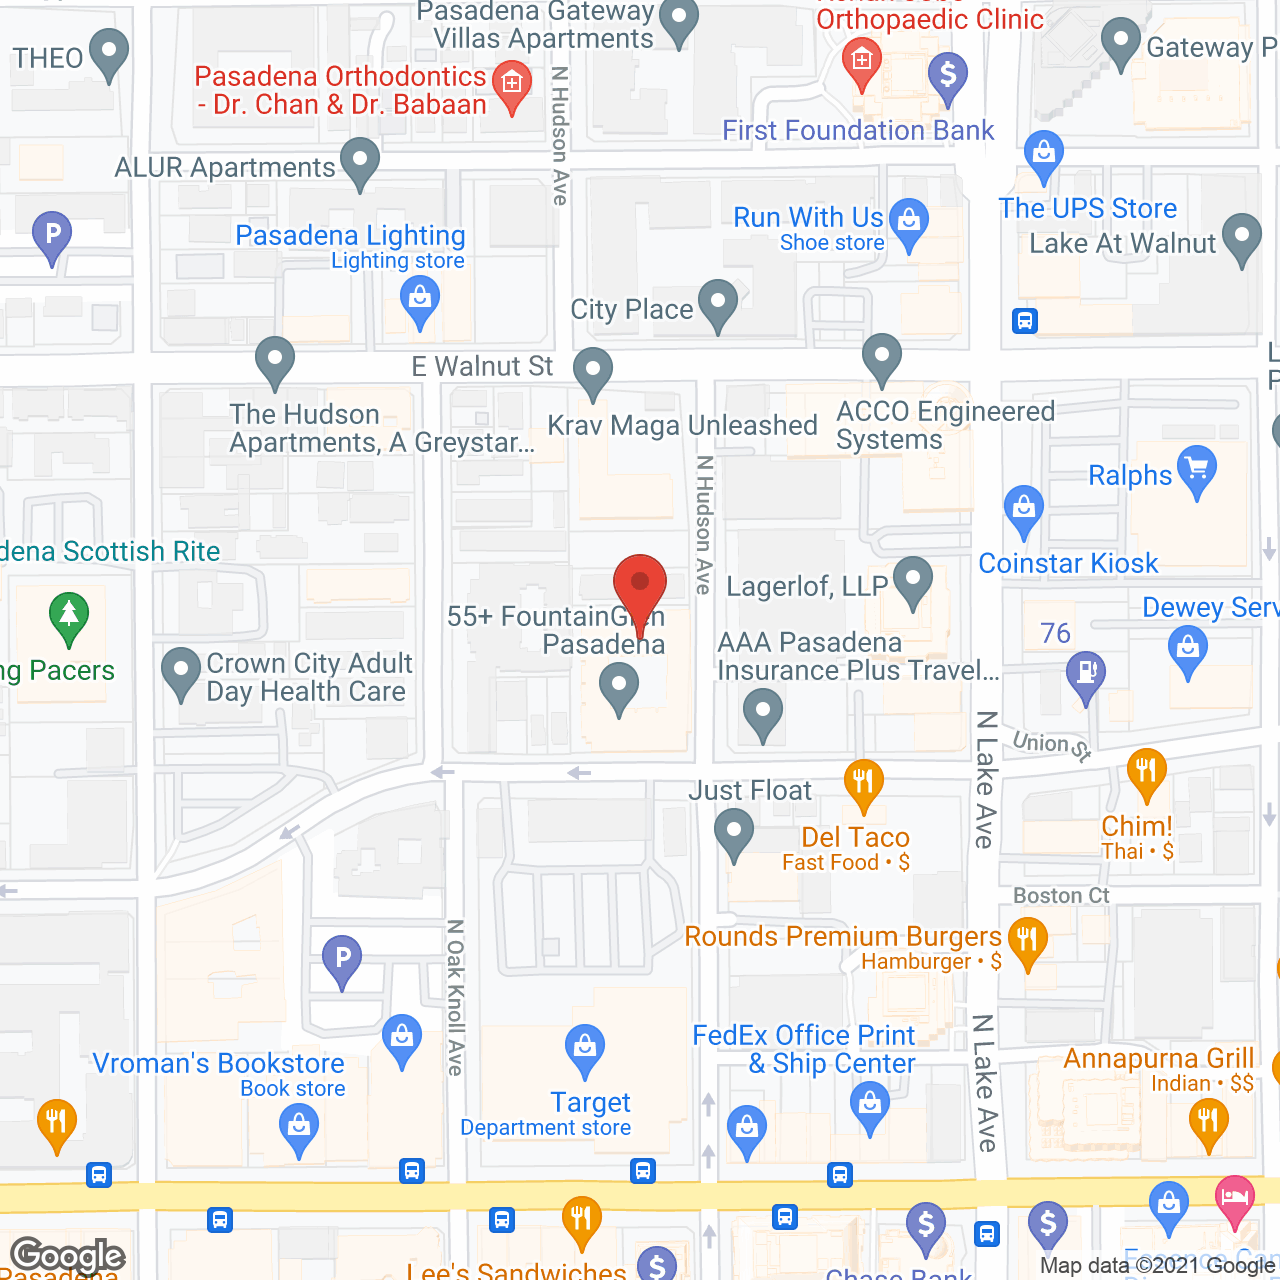 FountainGlen at Pasadena in google map